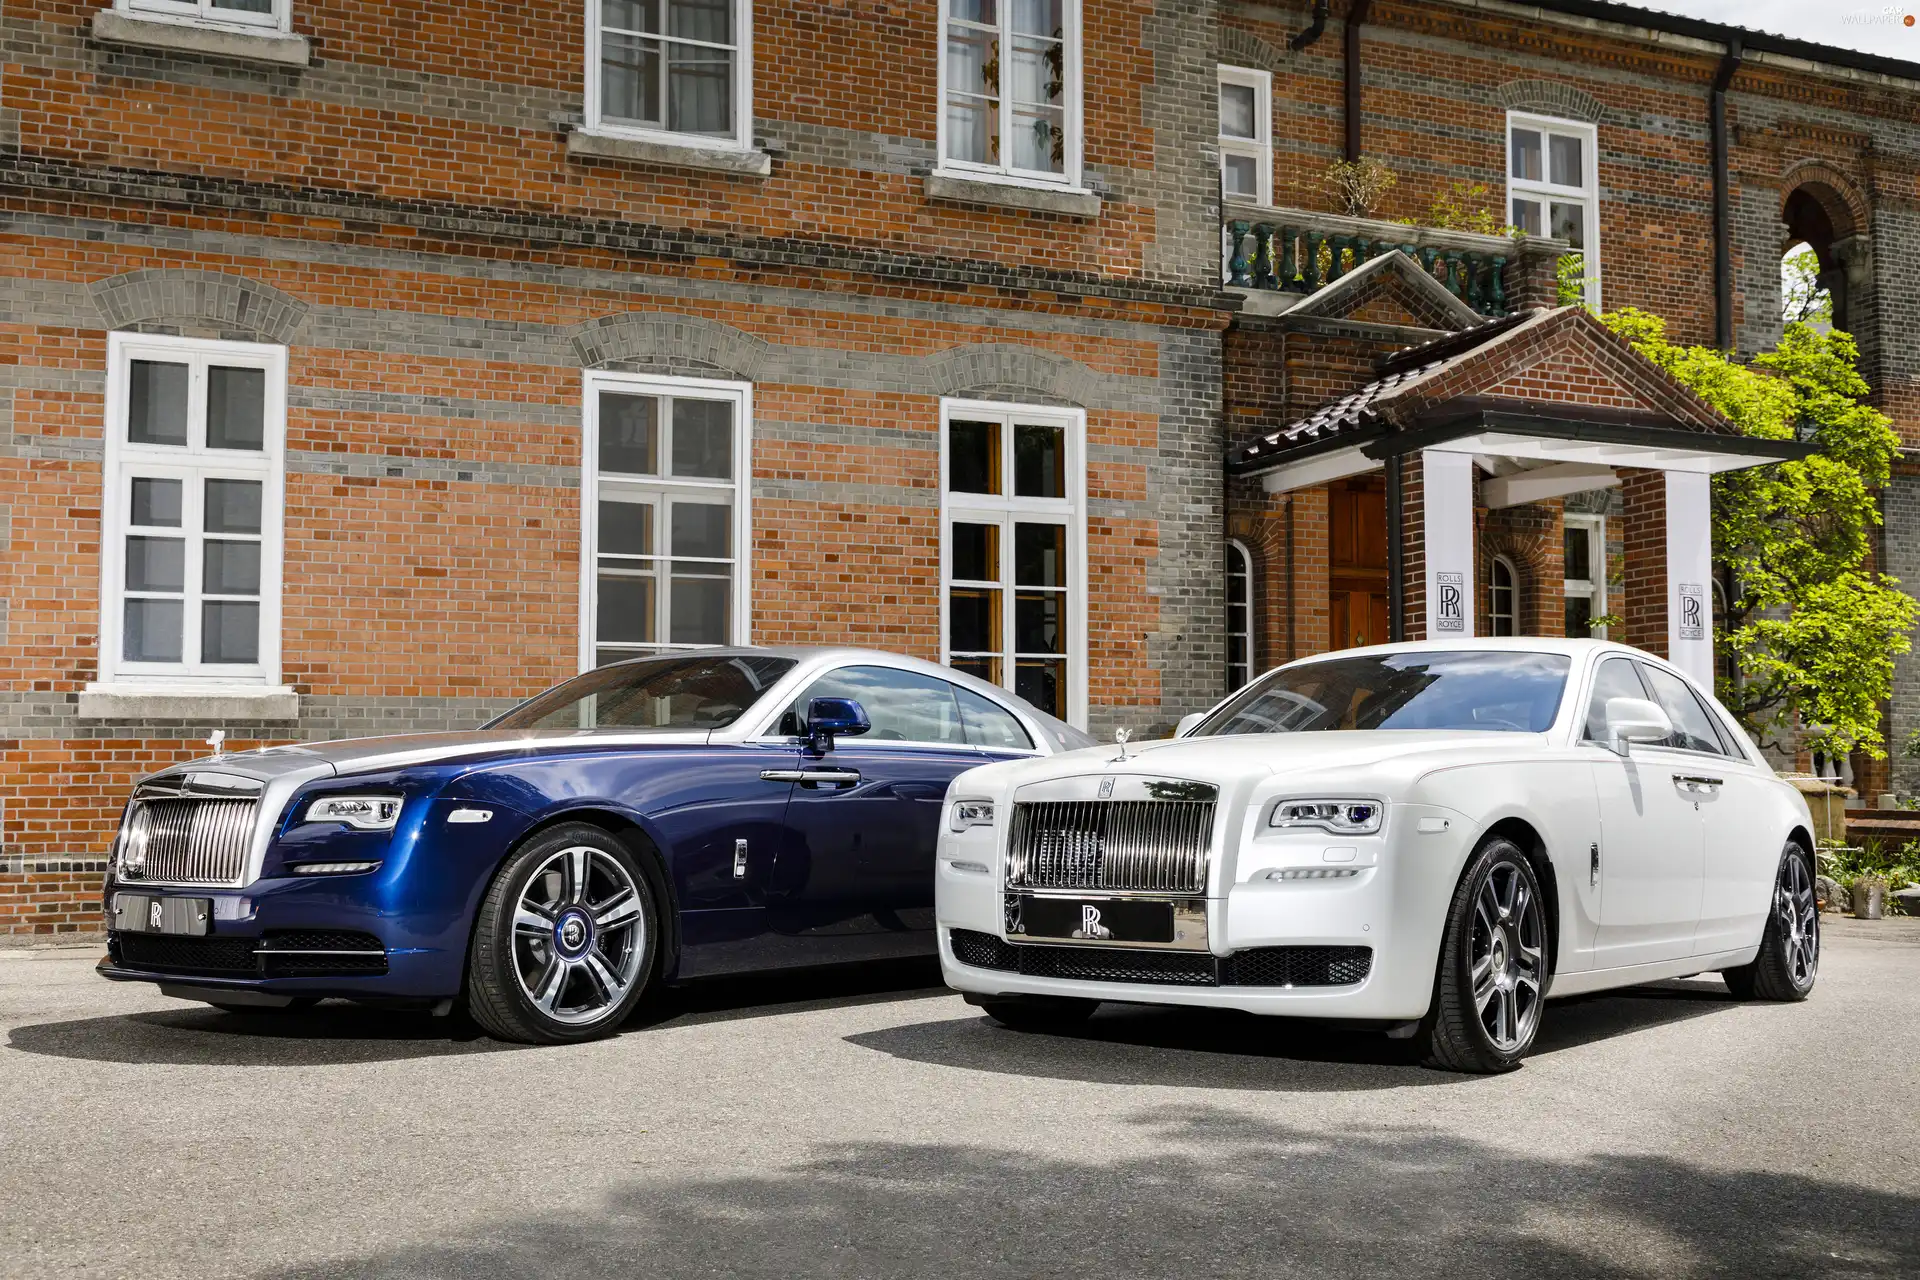 Rolls-Royce Wraith, House, Rolls-Royce Ghost, White, blue